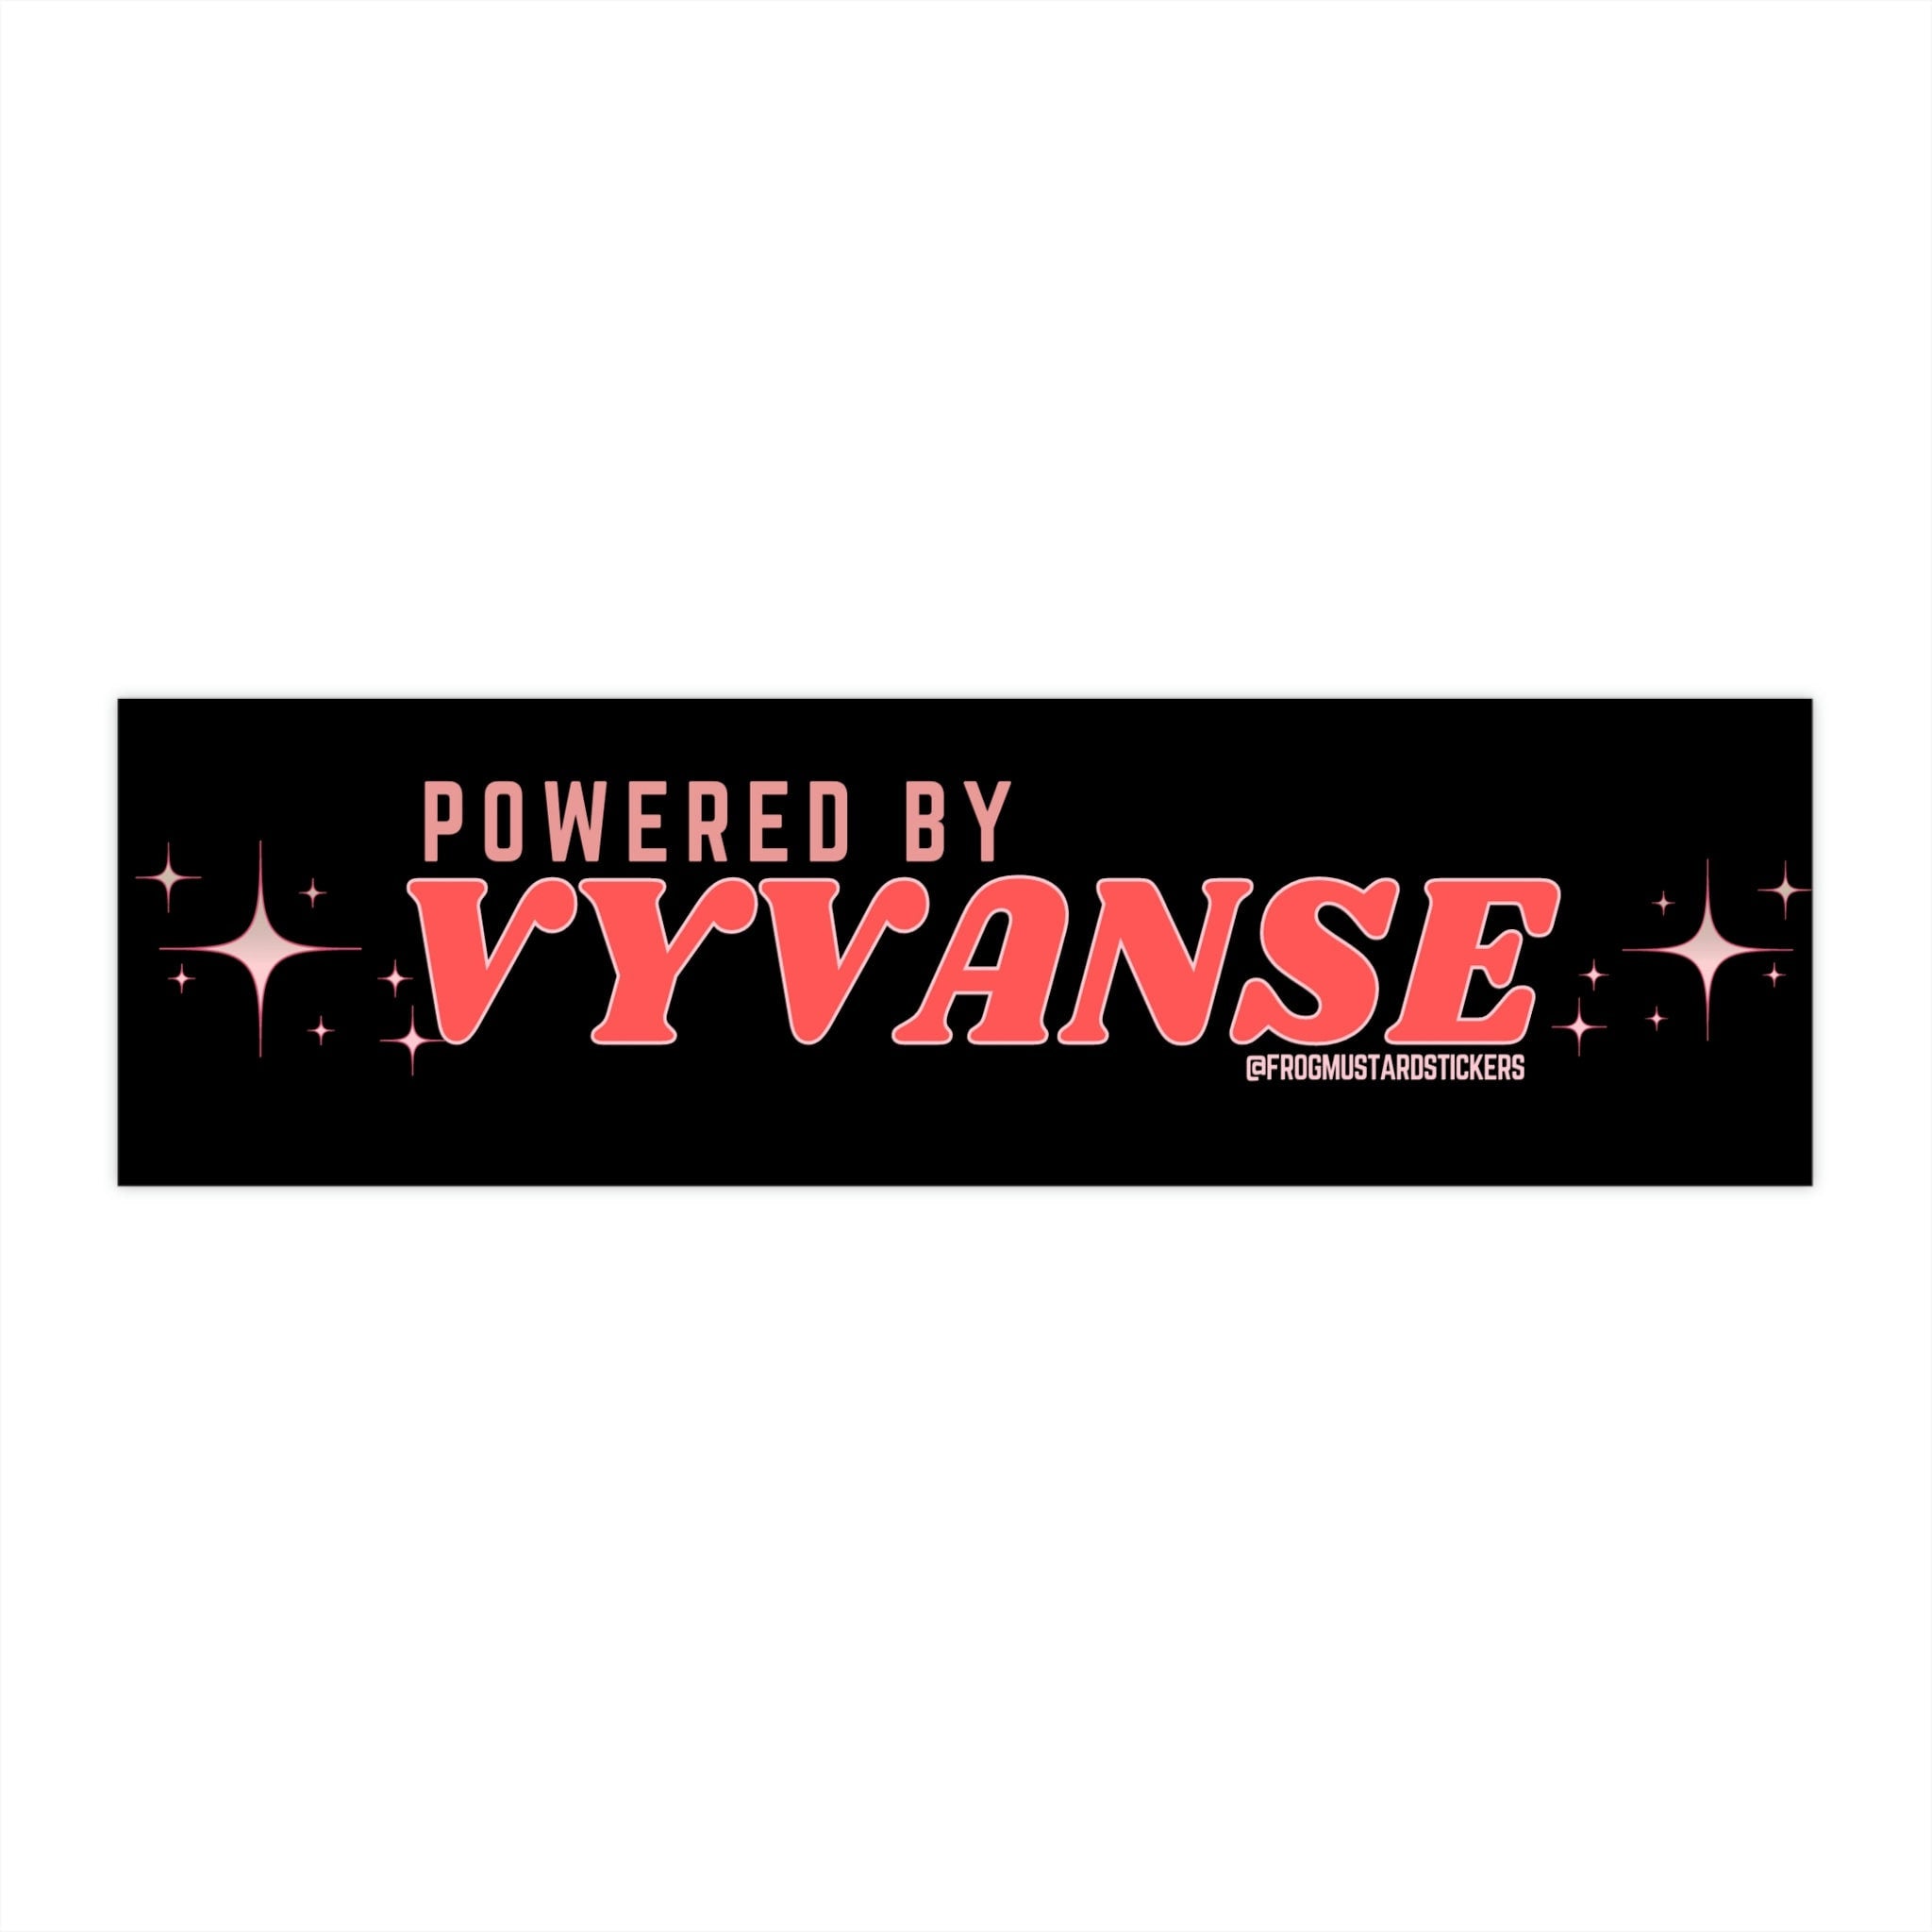 Power by Vyvanse Bumper Sticker OR Magnet | ADHD ADD Adderall | Mental Health Awareness | 8.5" x 2.5"